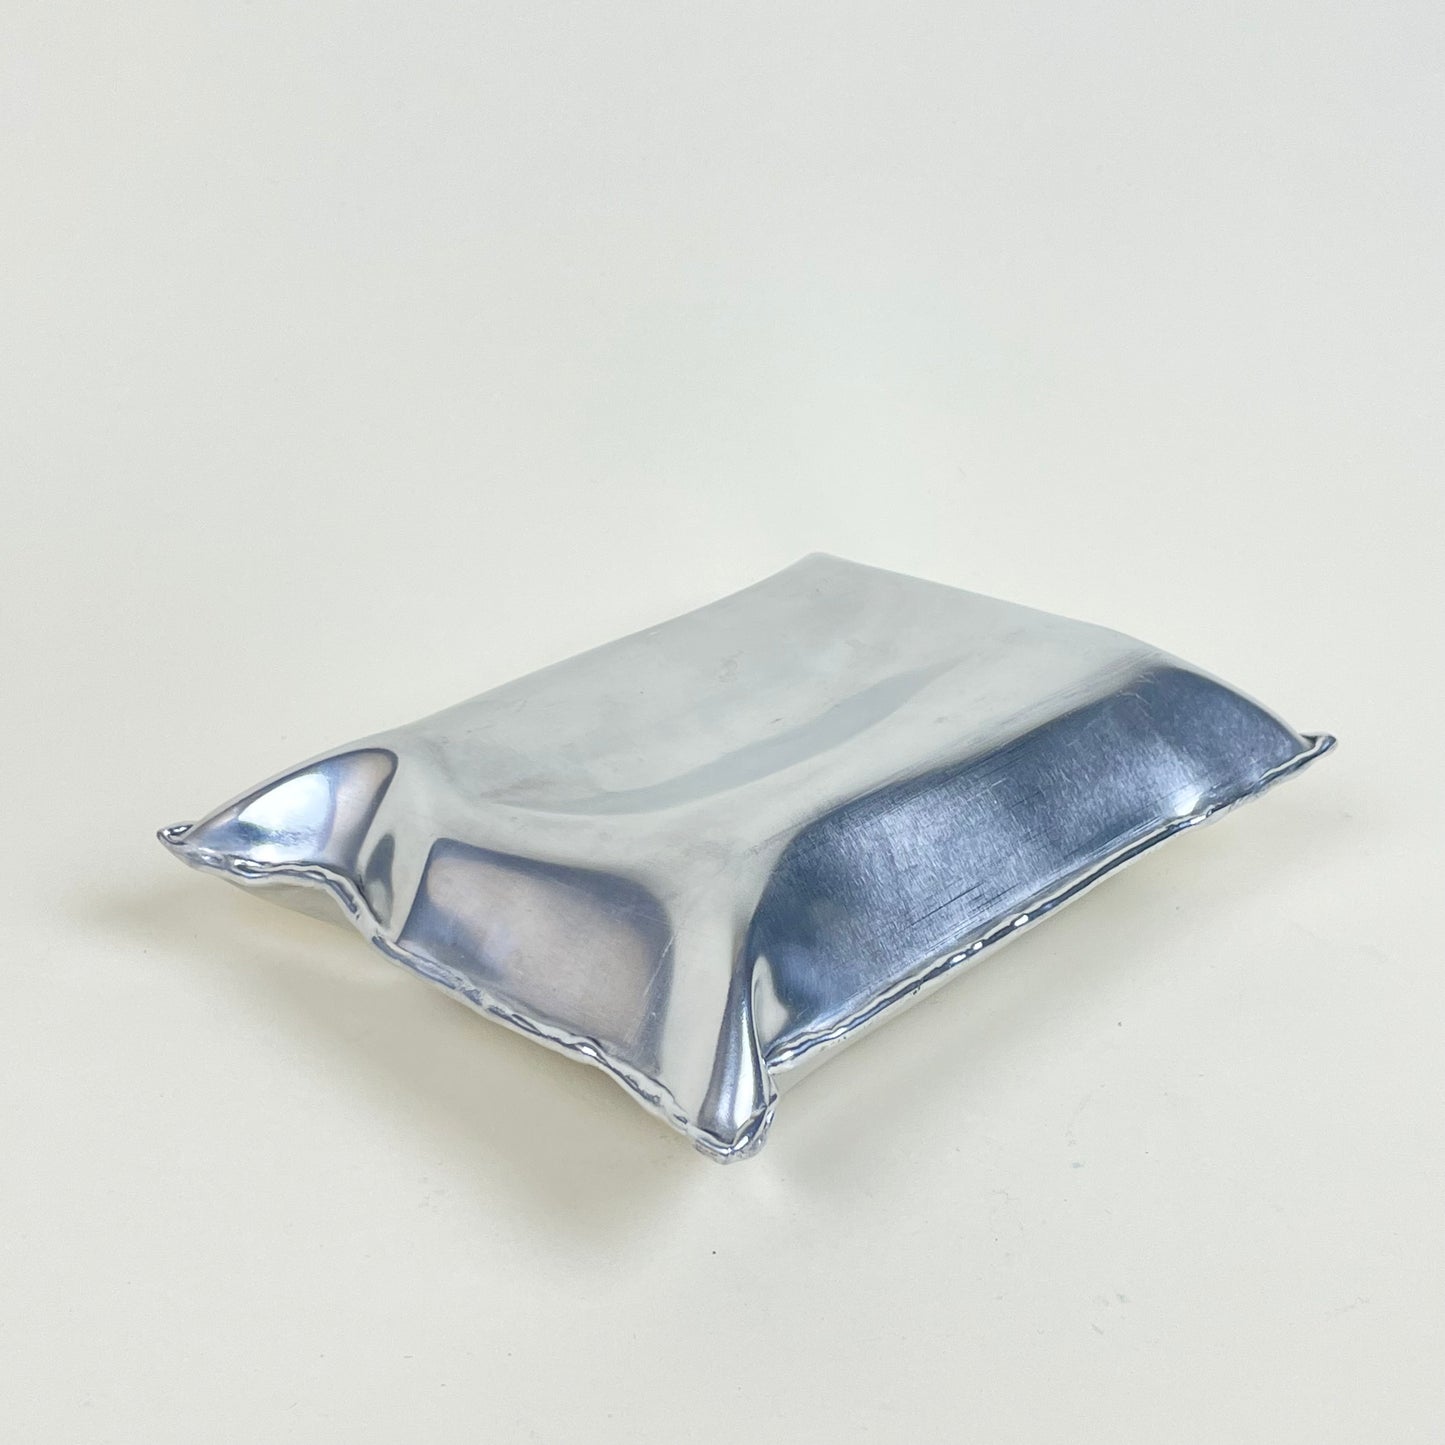 Aluminum pillow, Large American, by Emma Stocklassa